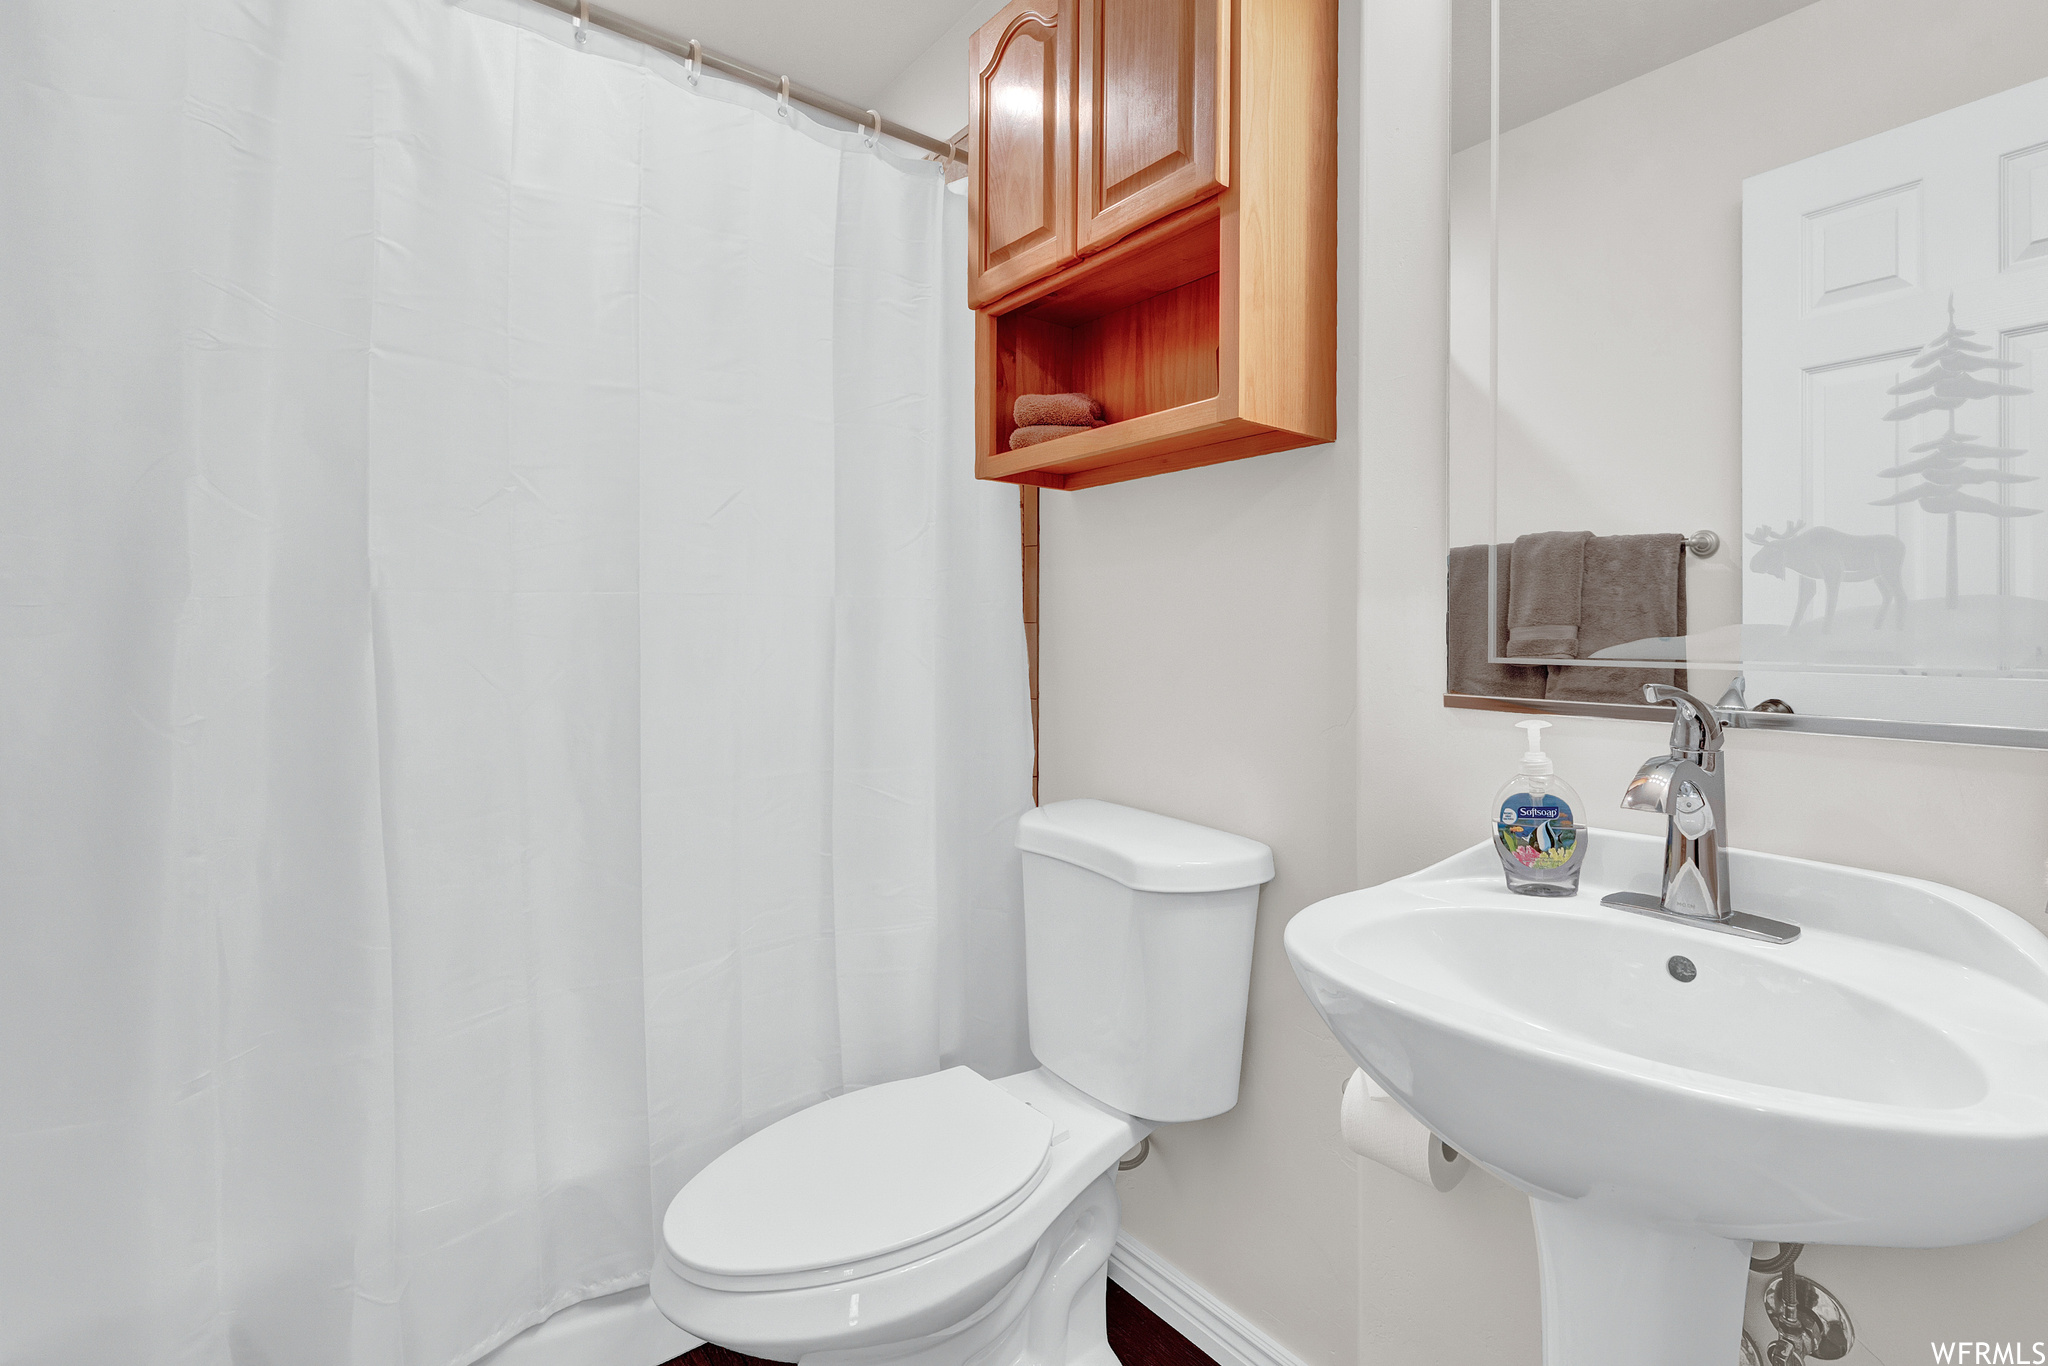 Level 1 Bathroom: Bathroom featuring shower curtain, sink, mirror, and toilet